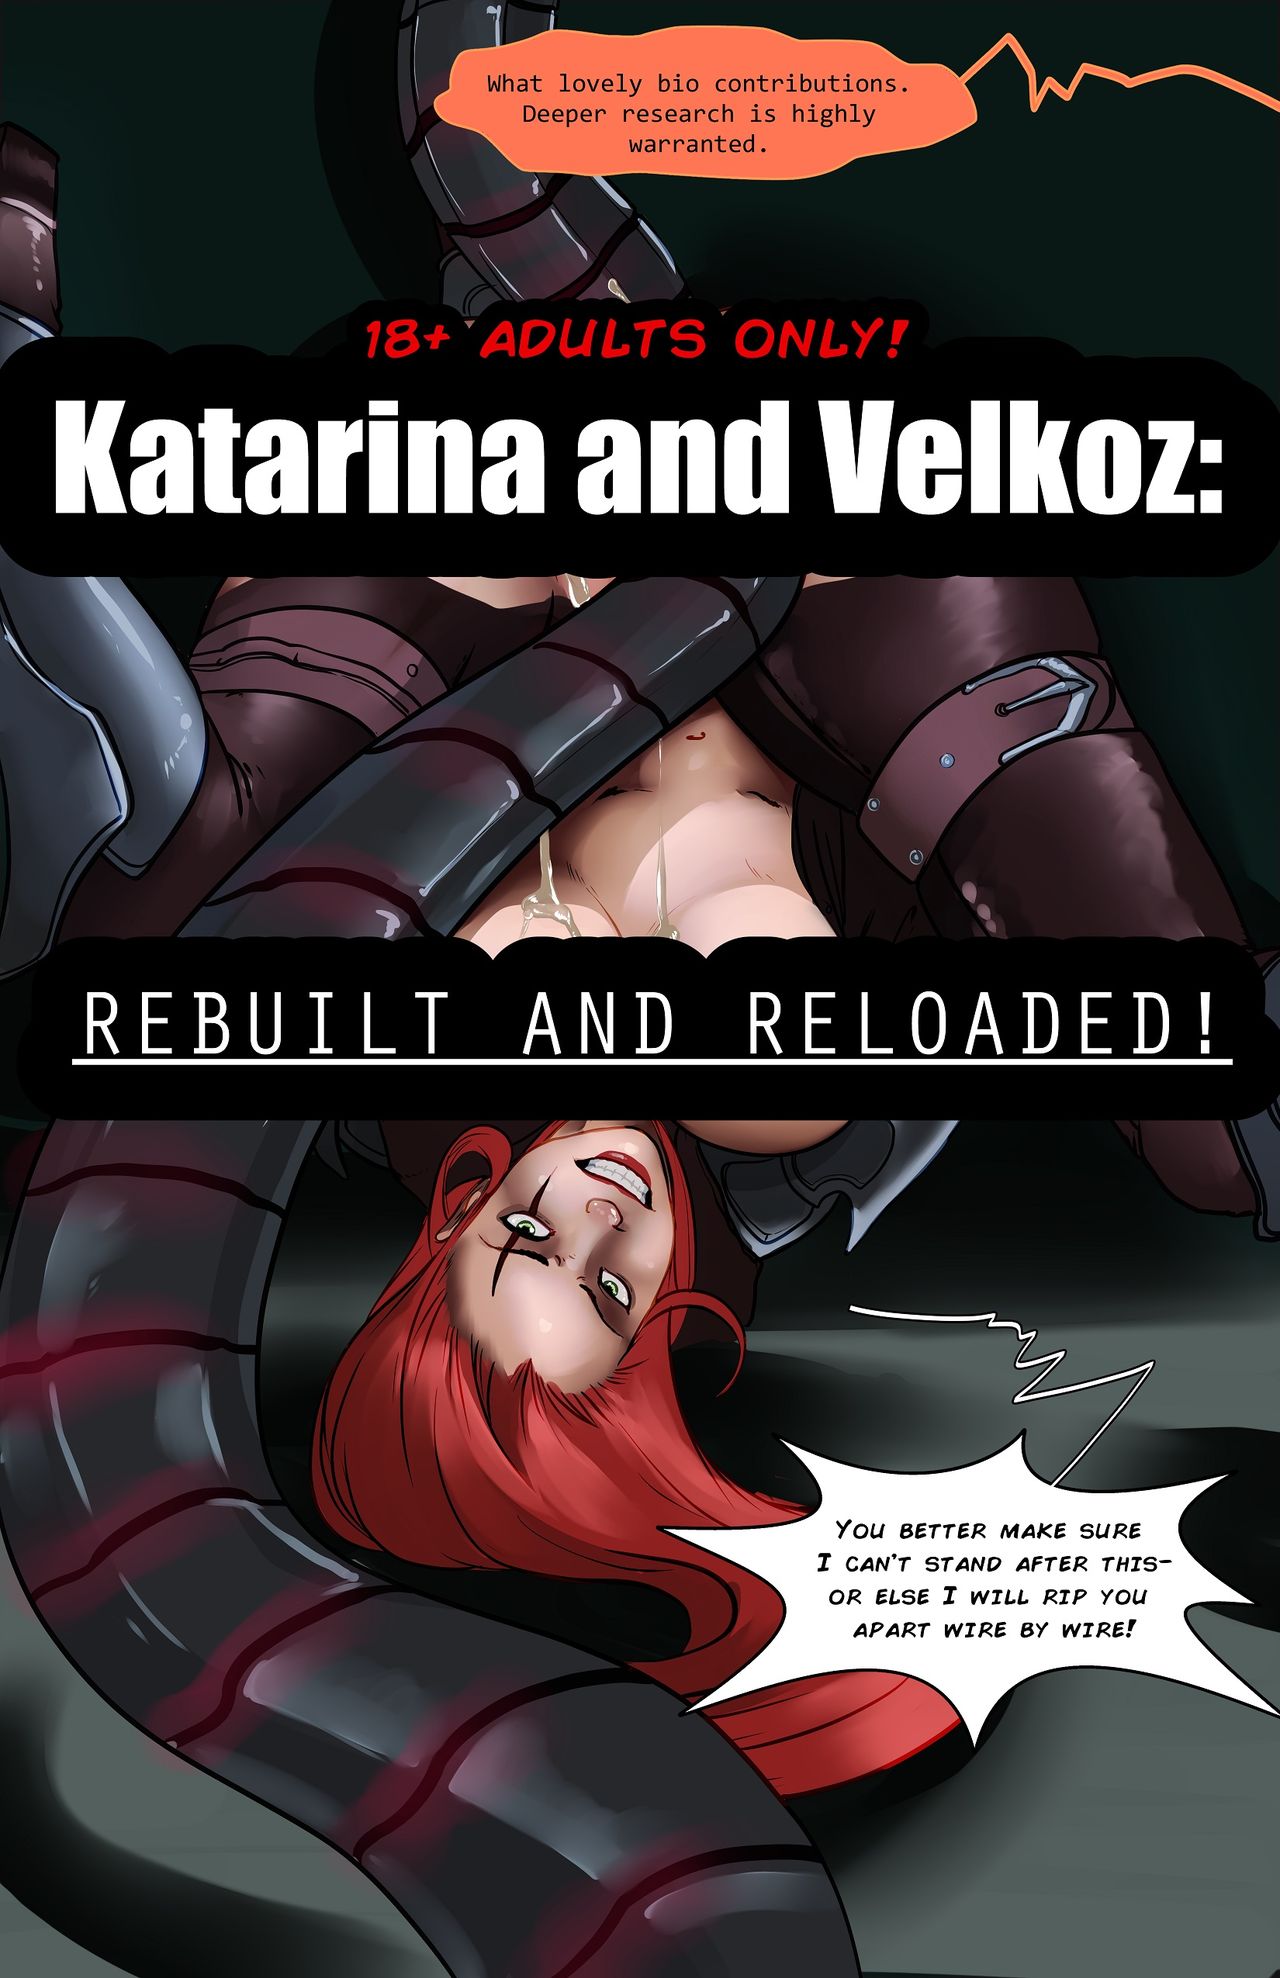 Katarina แล้ว velkoz สร้างใหม่ reloaded